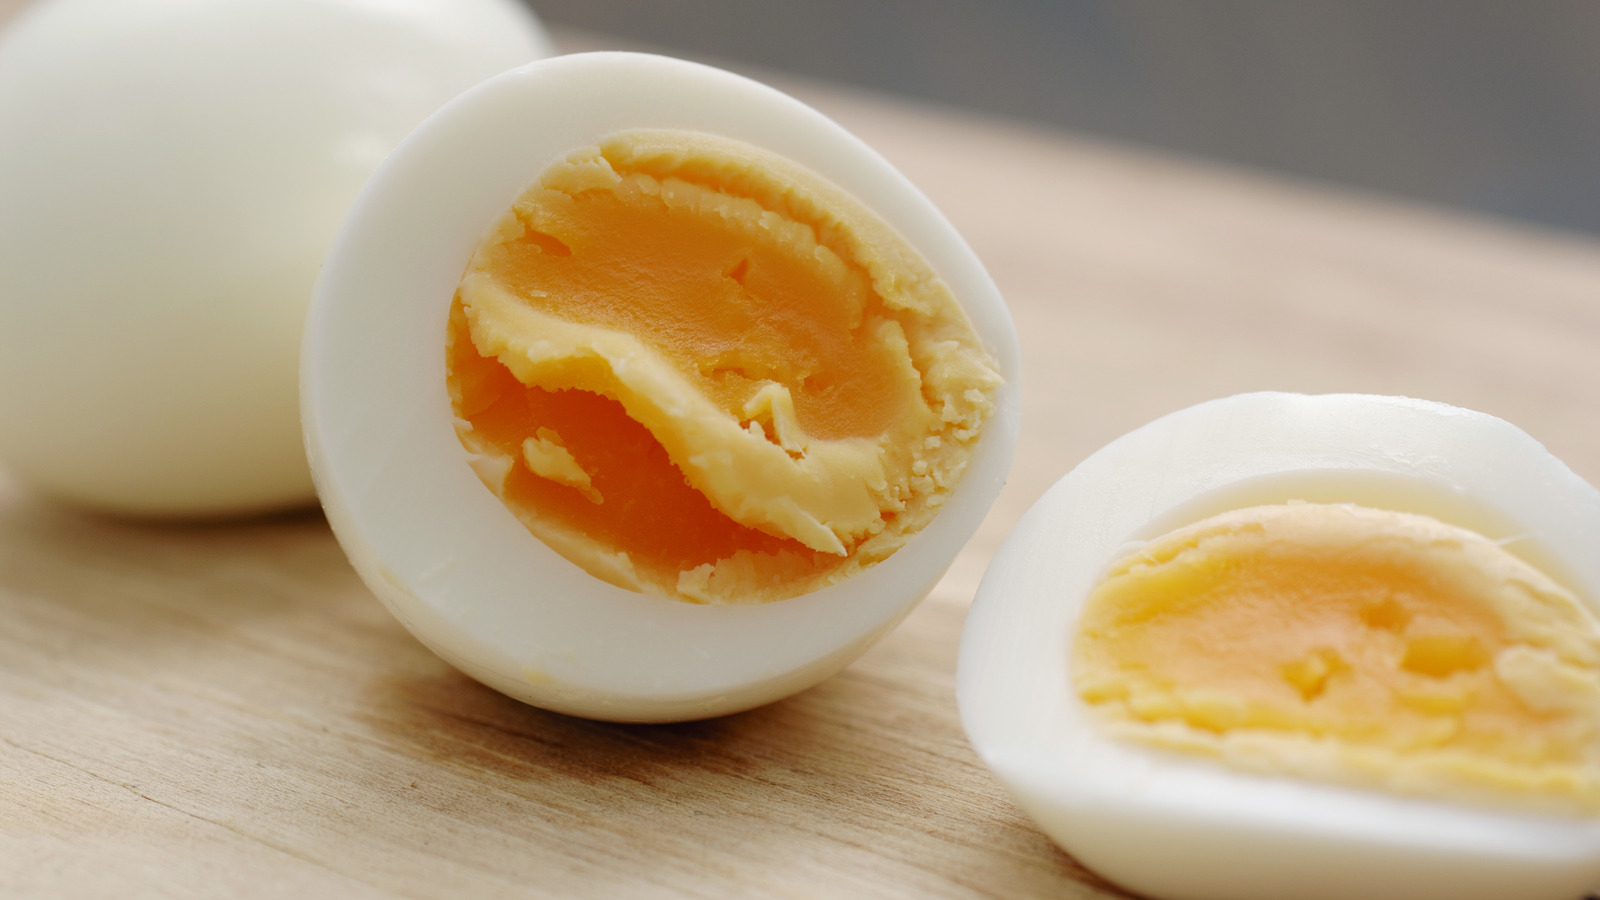 Ree Drummonds Kühlregal-Hack zum sofortigen Würfeln hartgekochter Eier